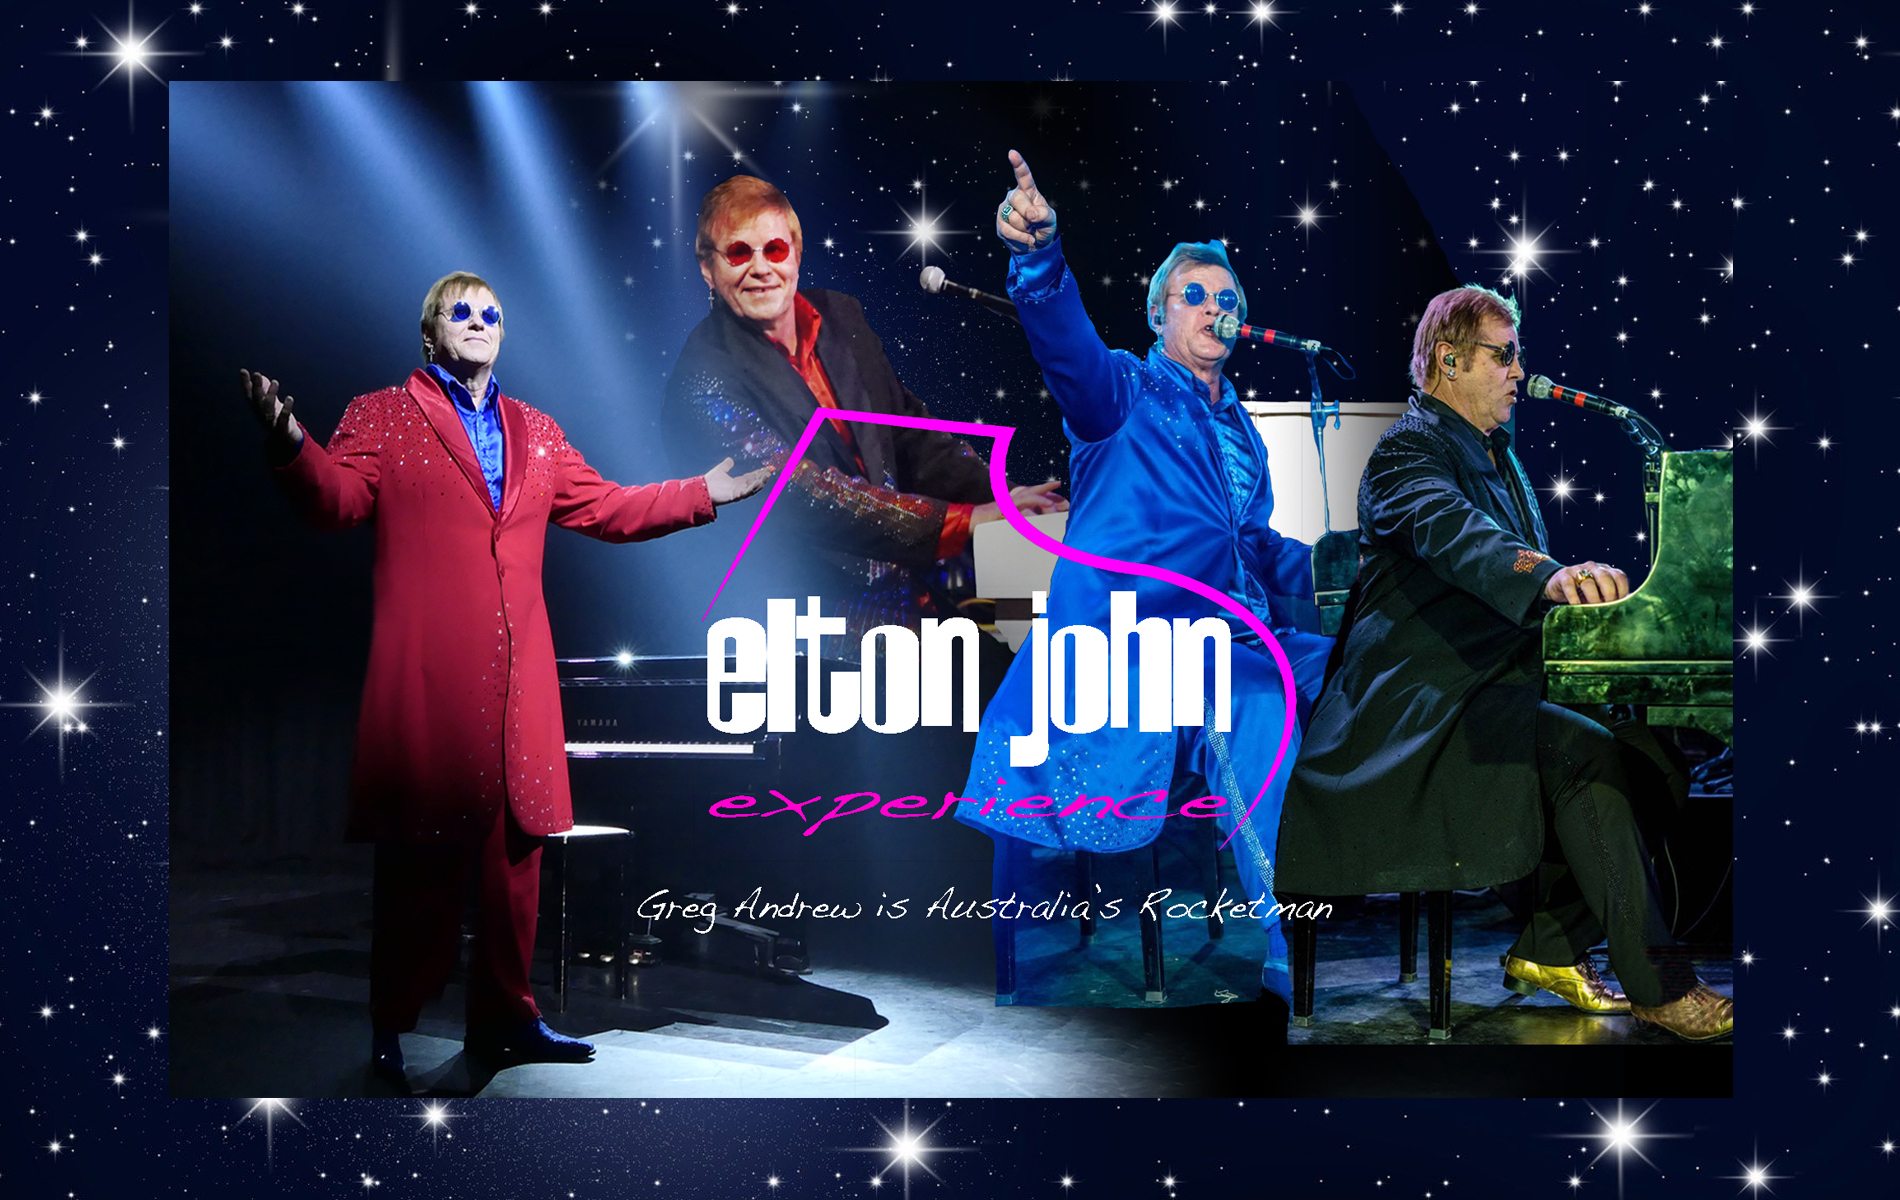 Elton John Experience Greg Andrew